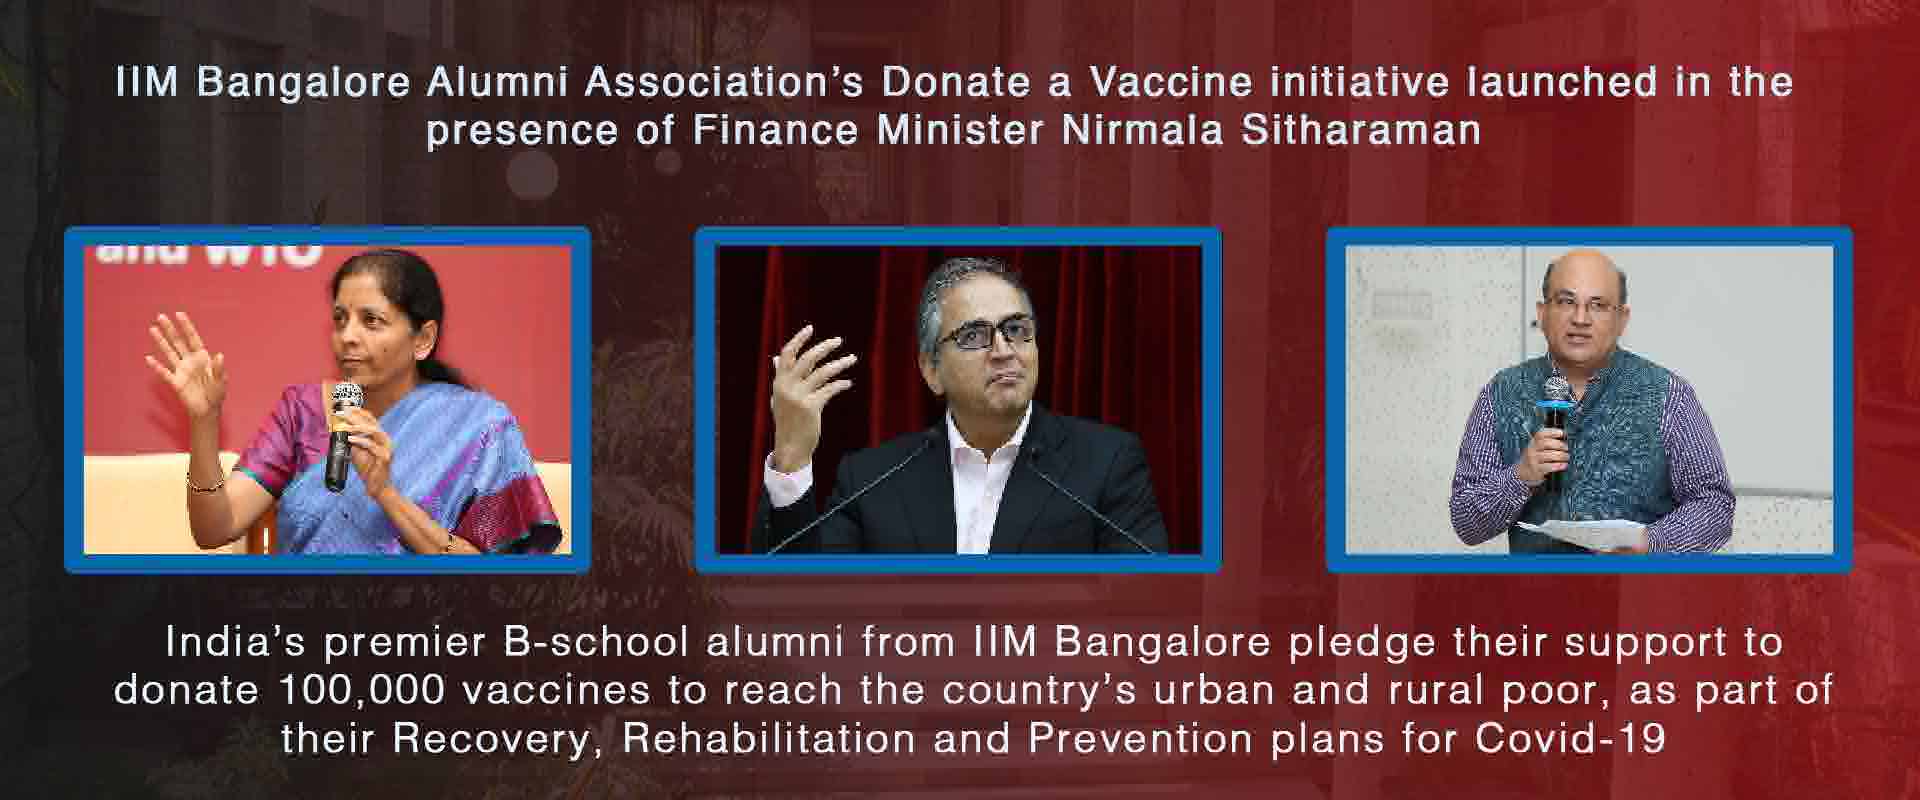 IIM Bangalore Alumni Association’s Donate a Vaccine initiative launched in the presence of Finance Minister Nirmala Sitharaman